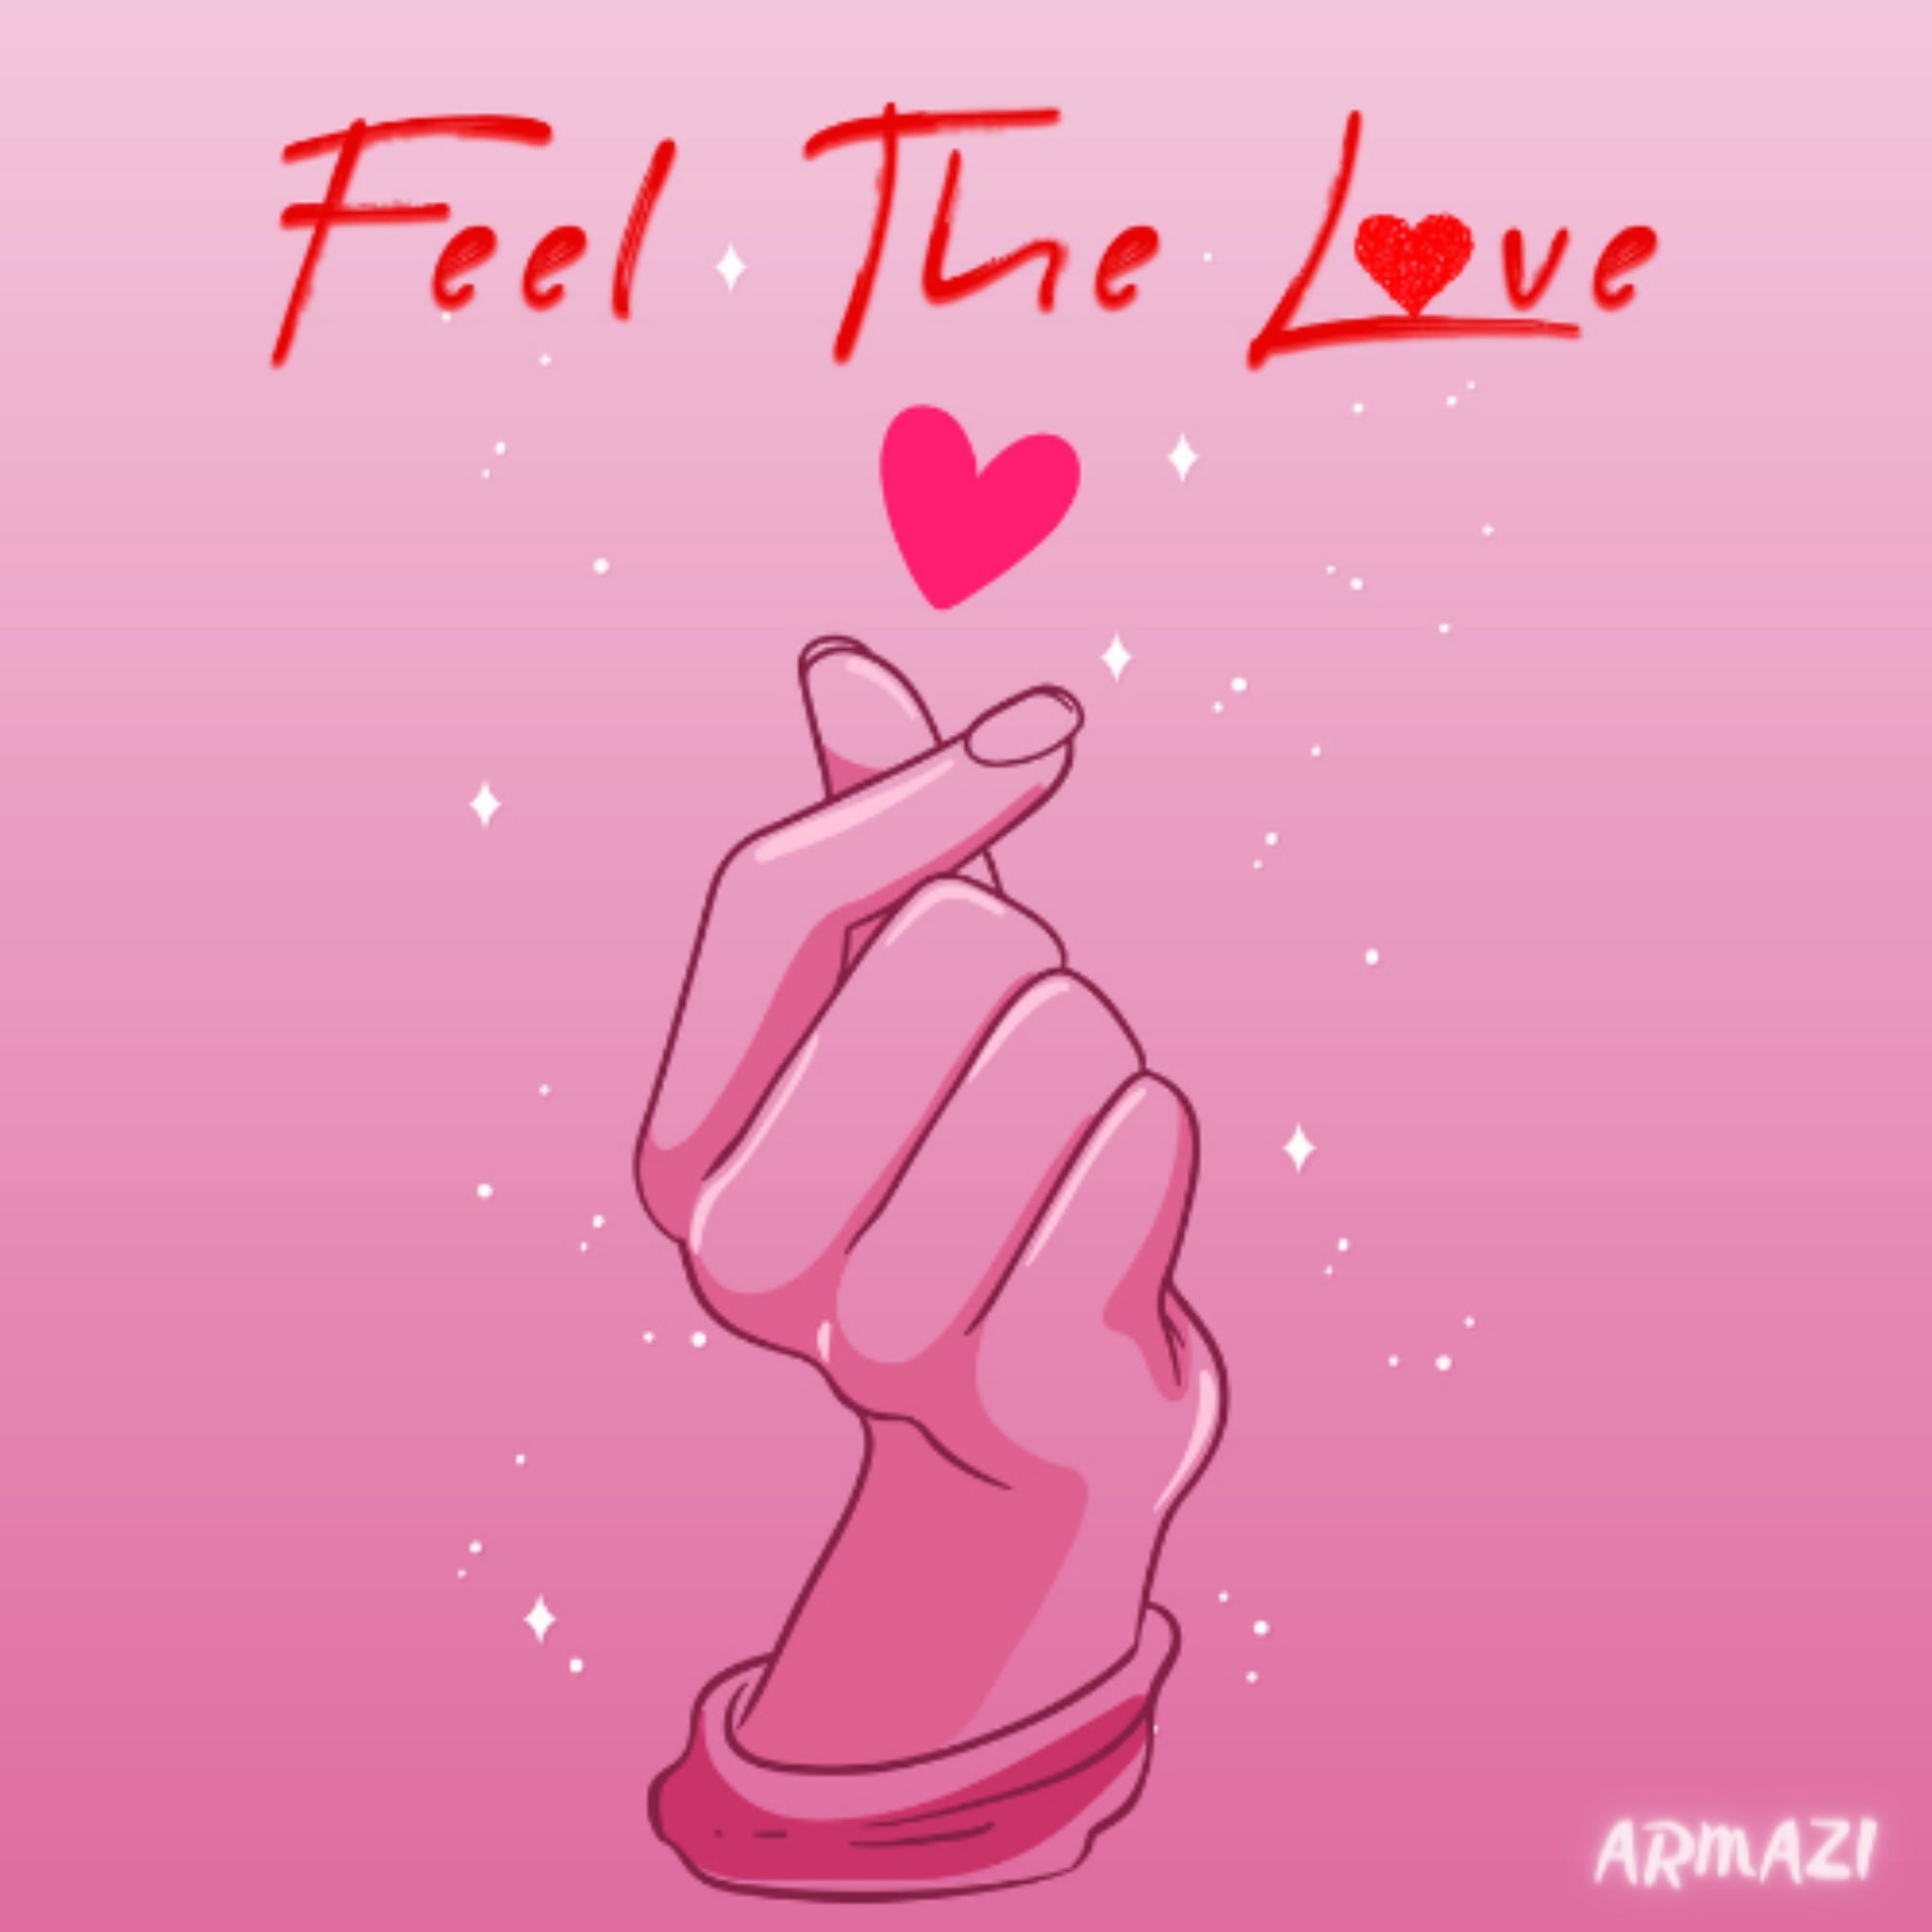 Feel The Love - Armazi - Scraps Audio